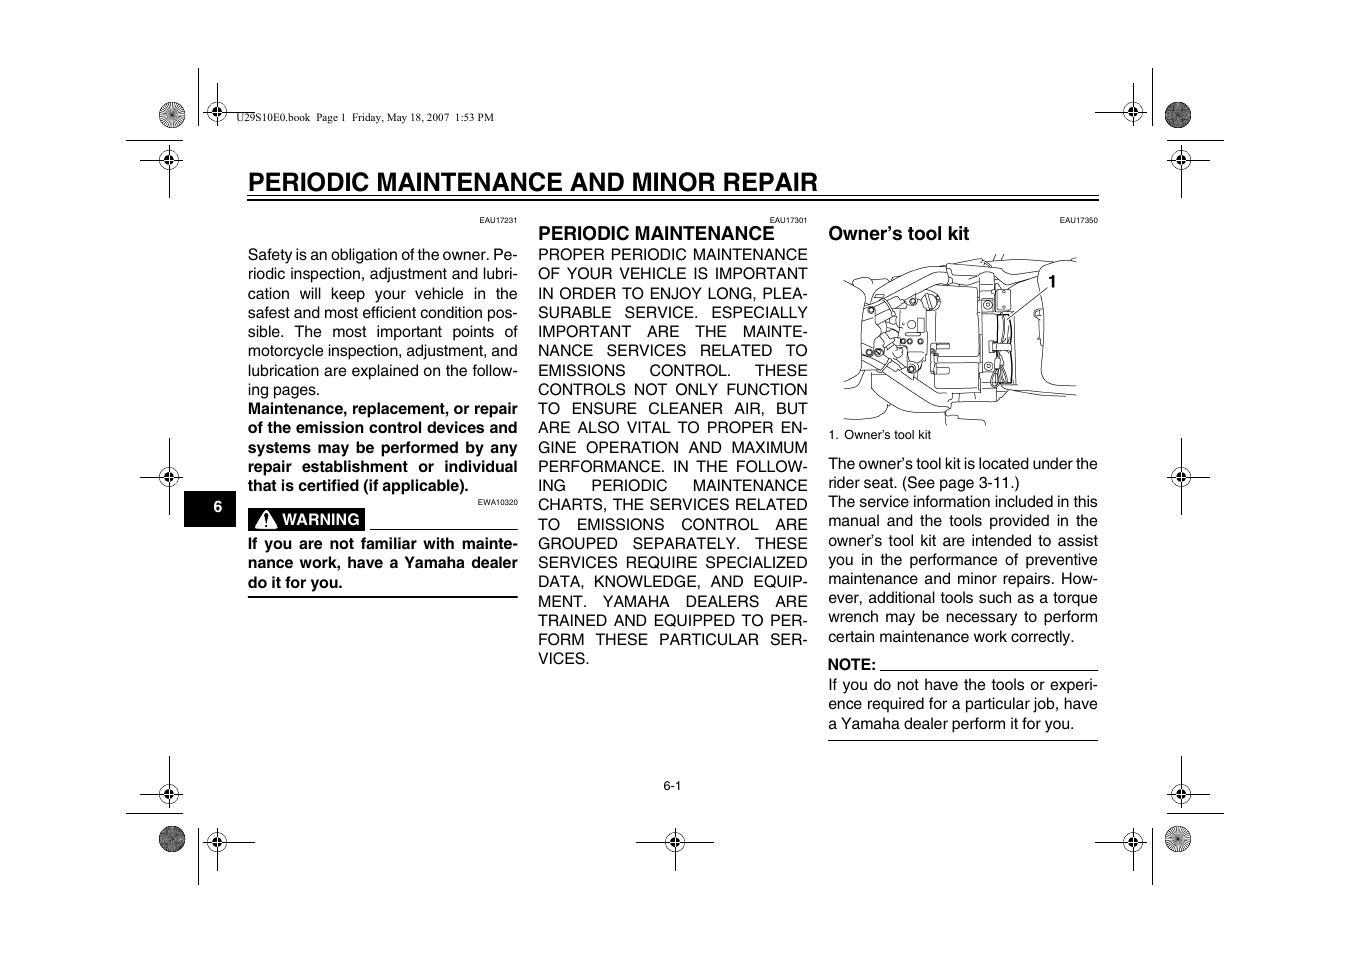 Periodic maintenance and minor repair, Periodic maintenance -1 owner’s tool kit -1 | Yamaha STAR XV19CX(C) User Manual | Page 42 / 96